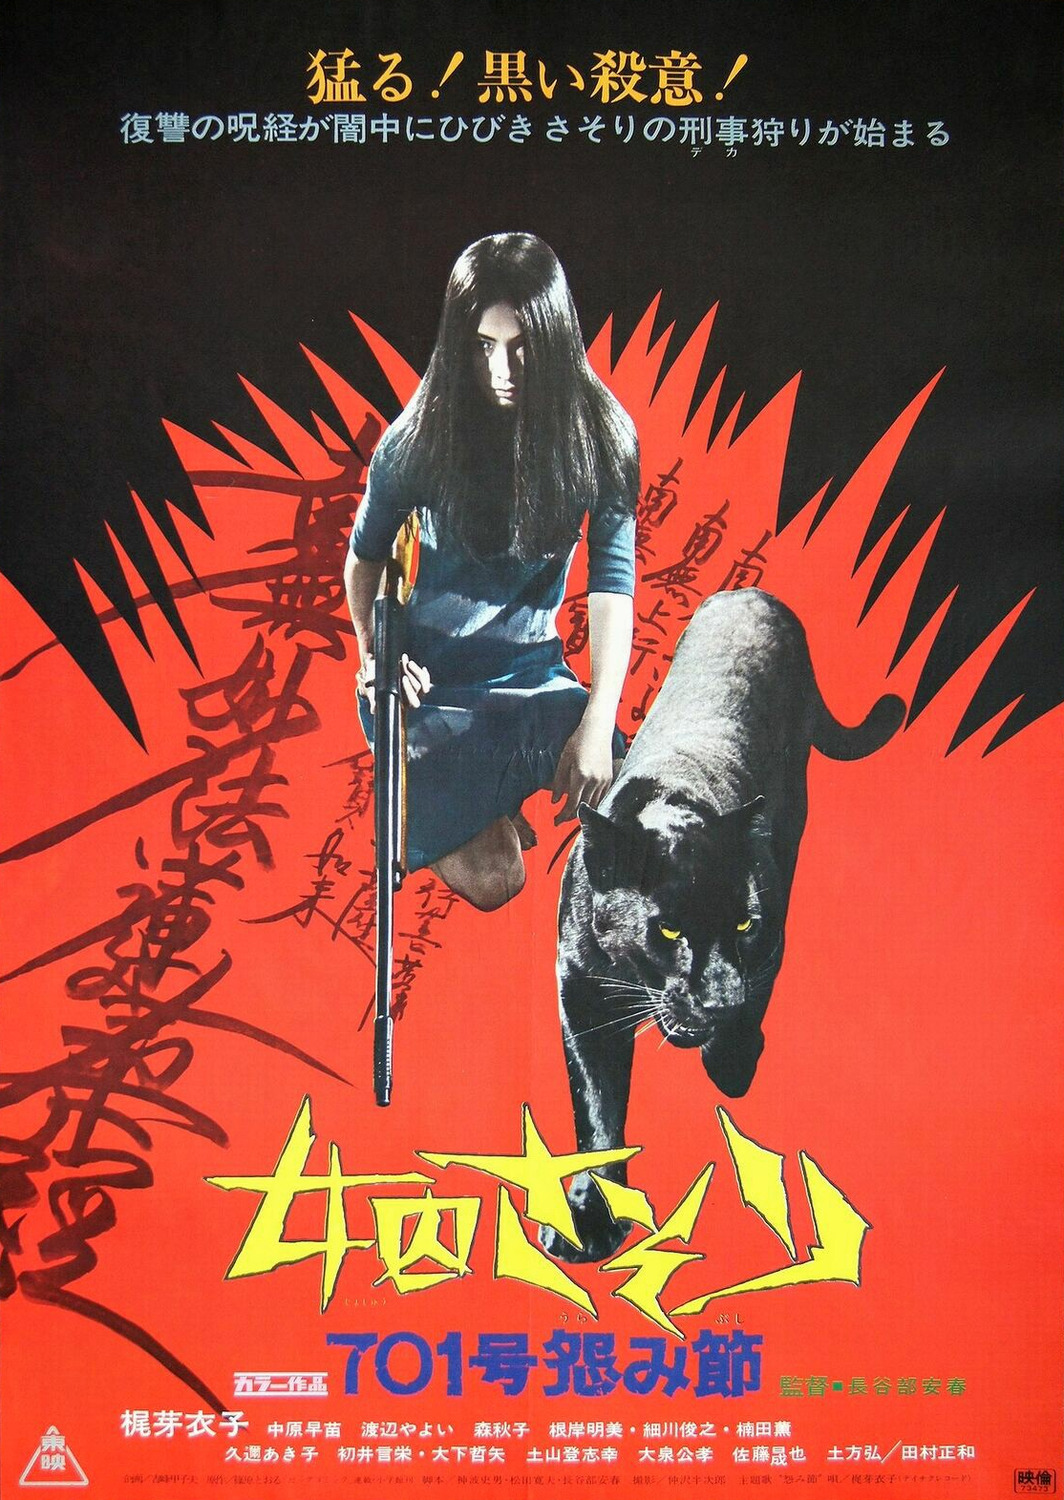 Extra Large Movie Poster Image for Joshû sasori: 701-gô urami-bushi (#1 of 2)